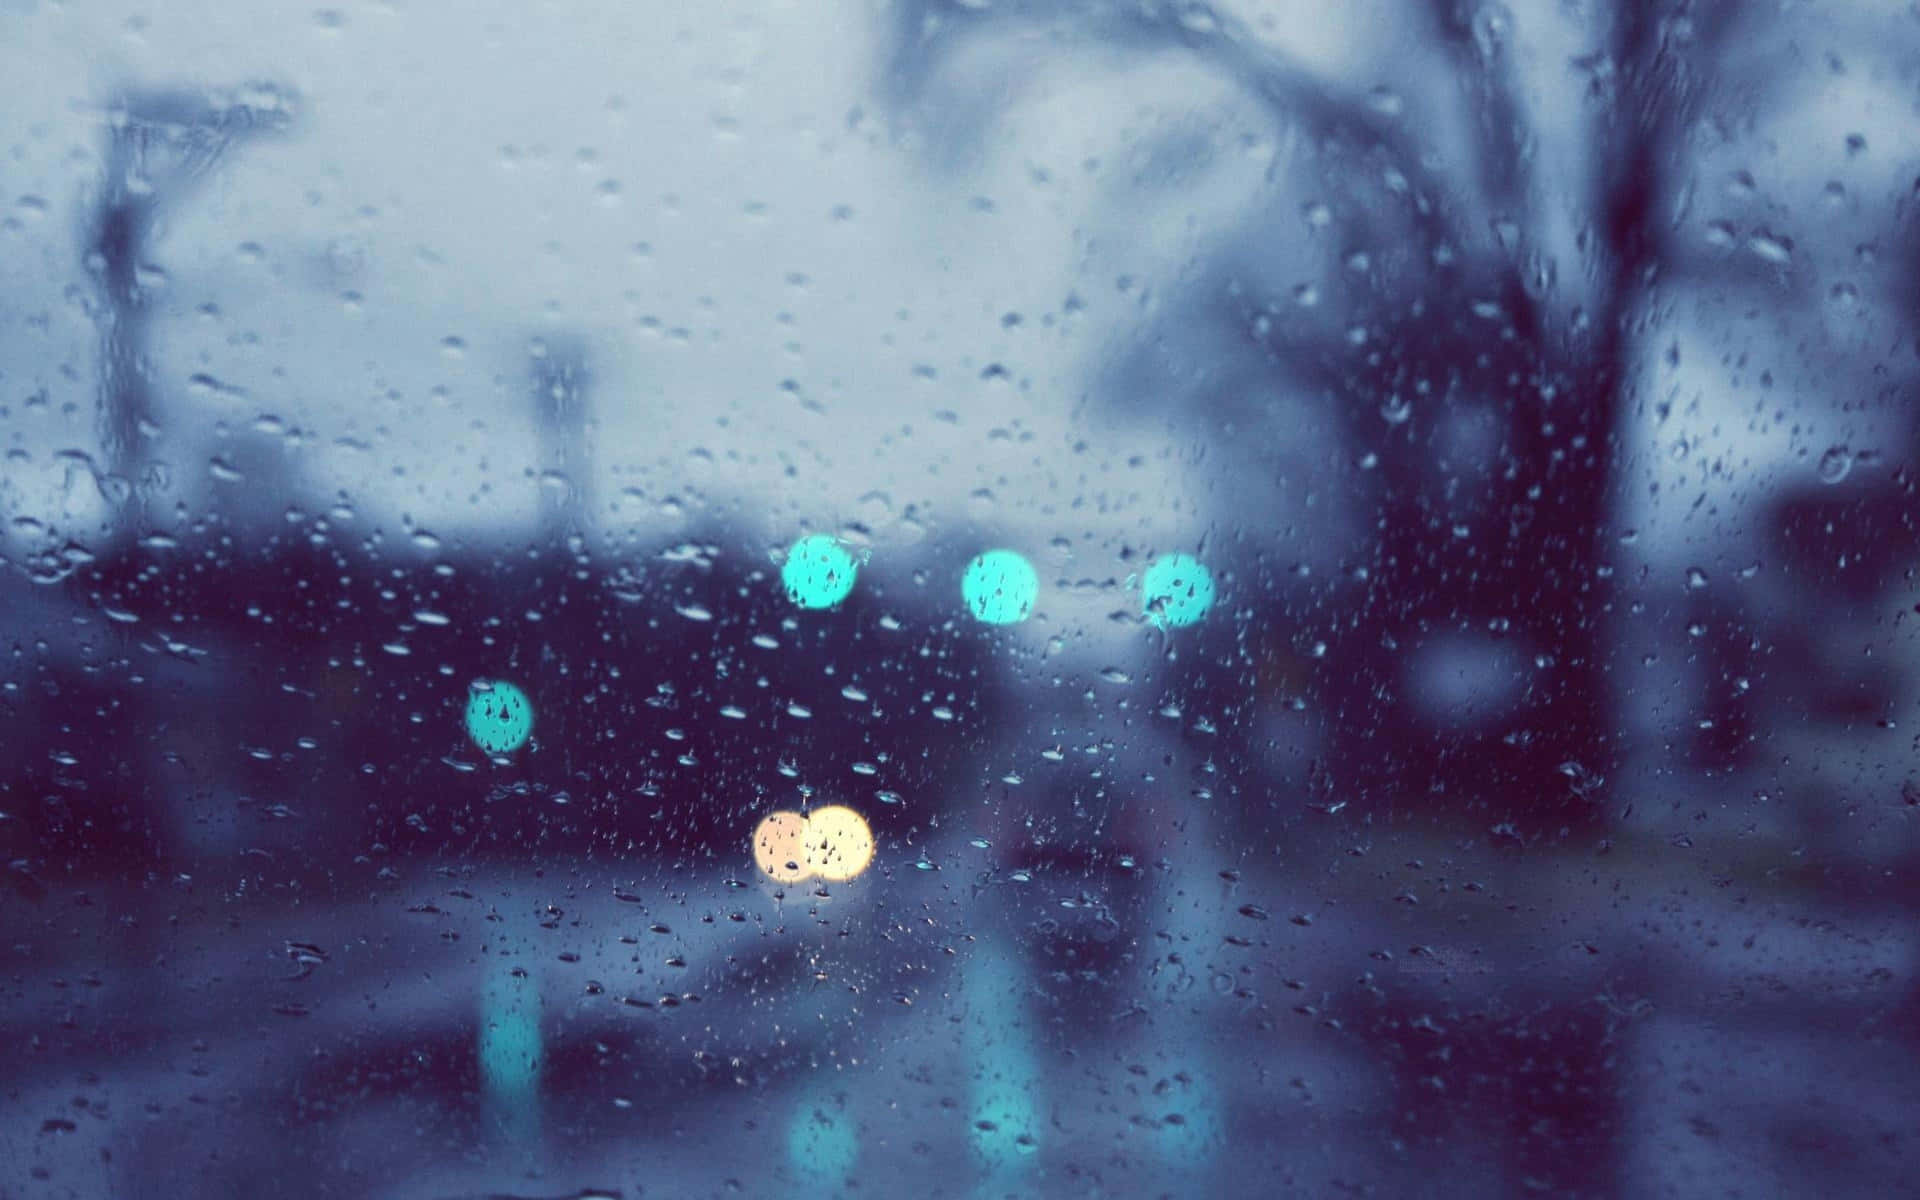 A street scene in the rain.